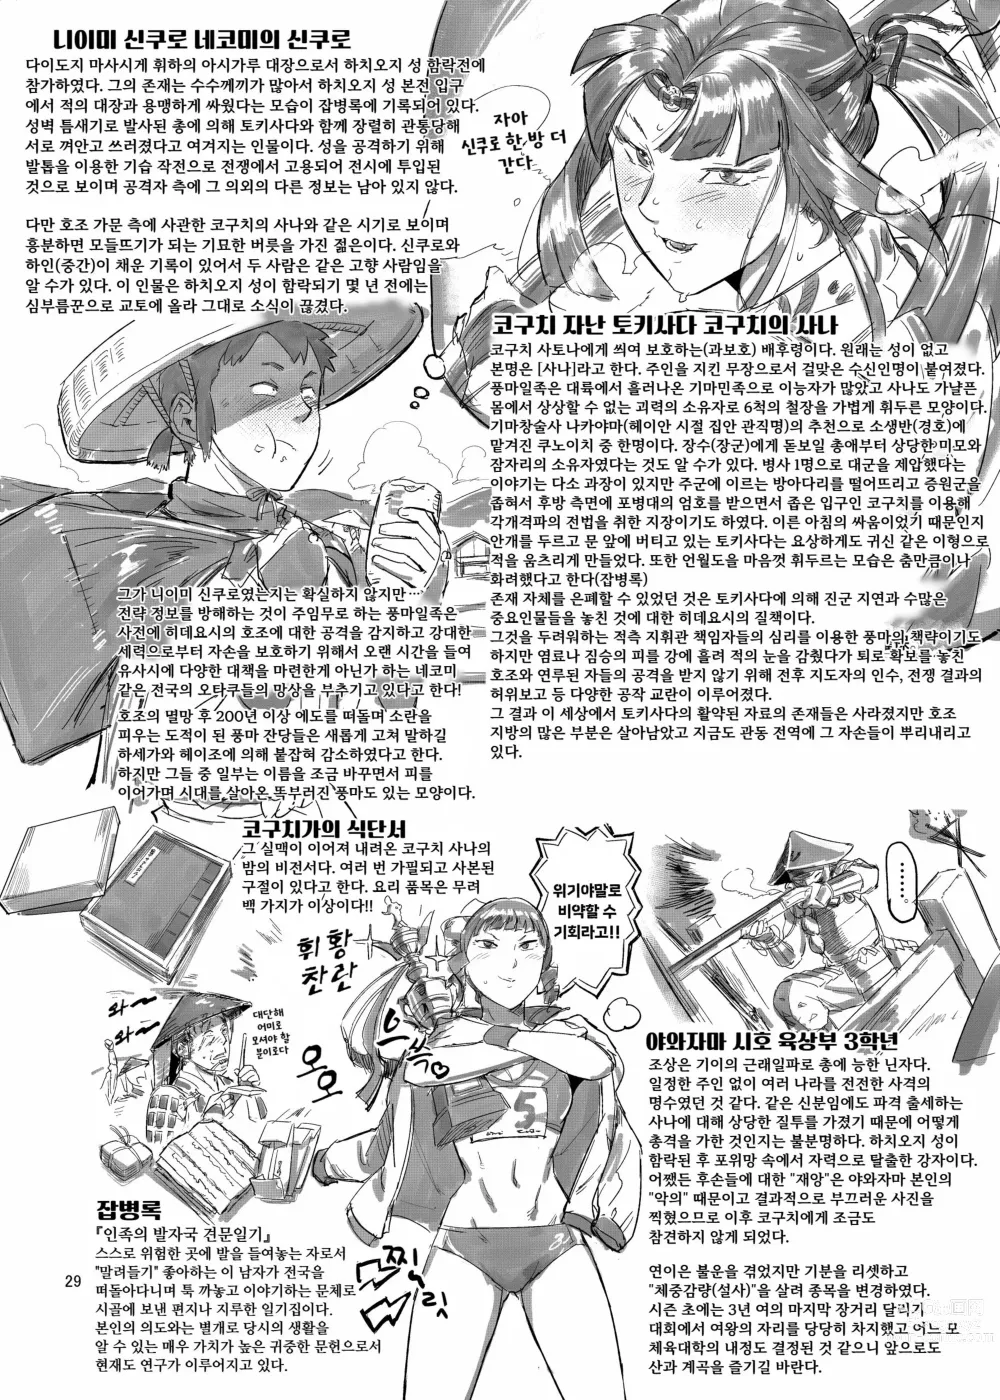 Page 29 of doujinshi 타이거 스프린트